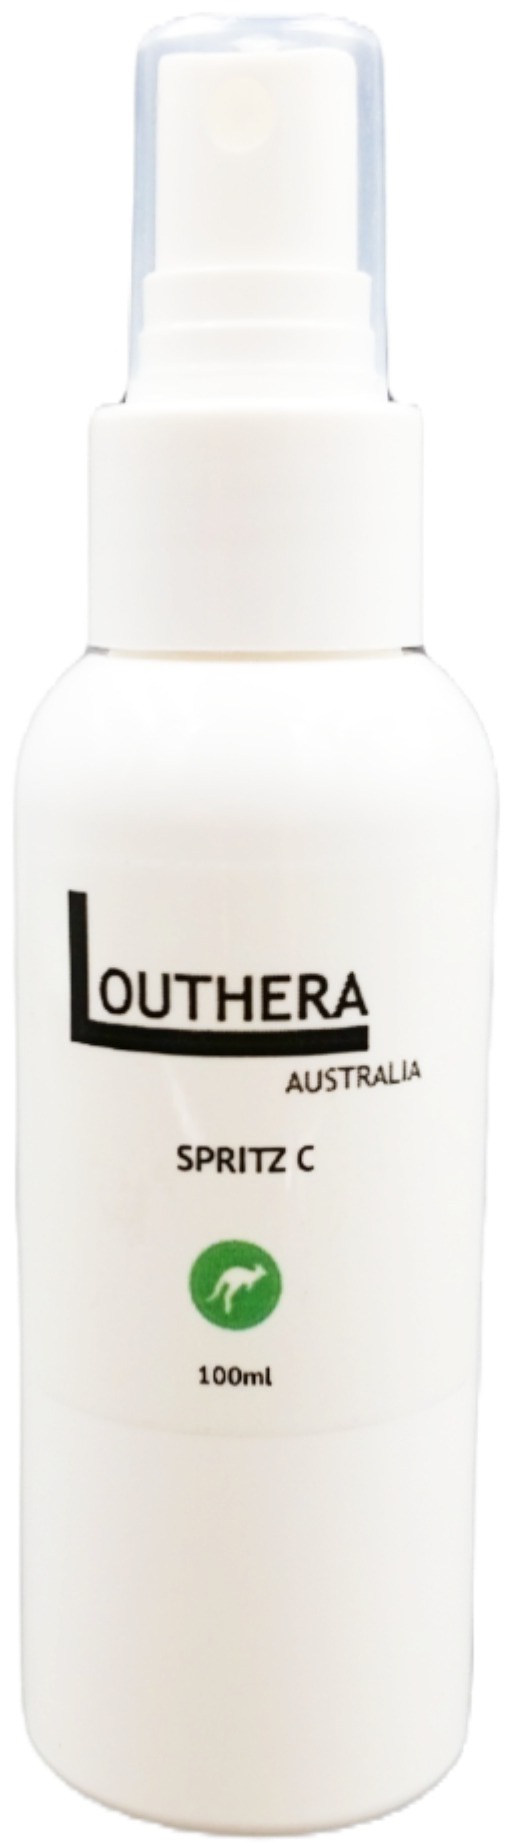 Louthera Spritz C